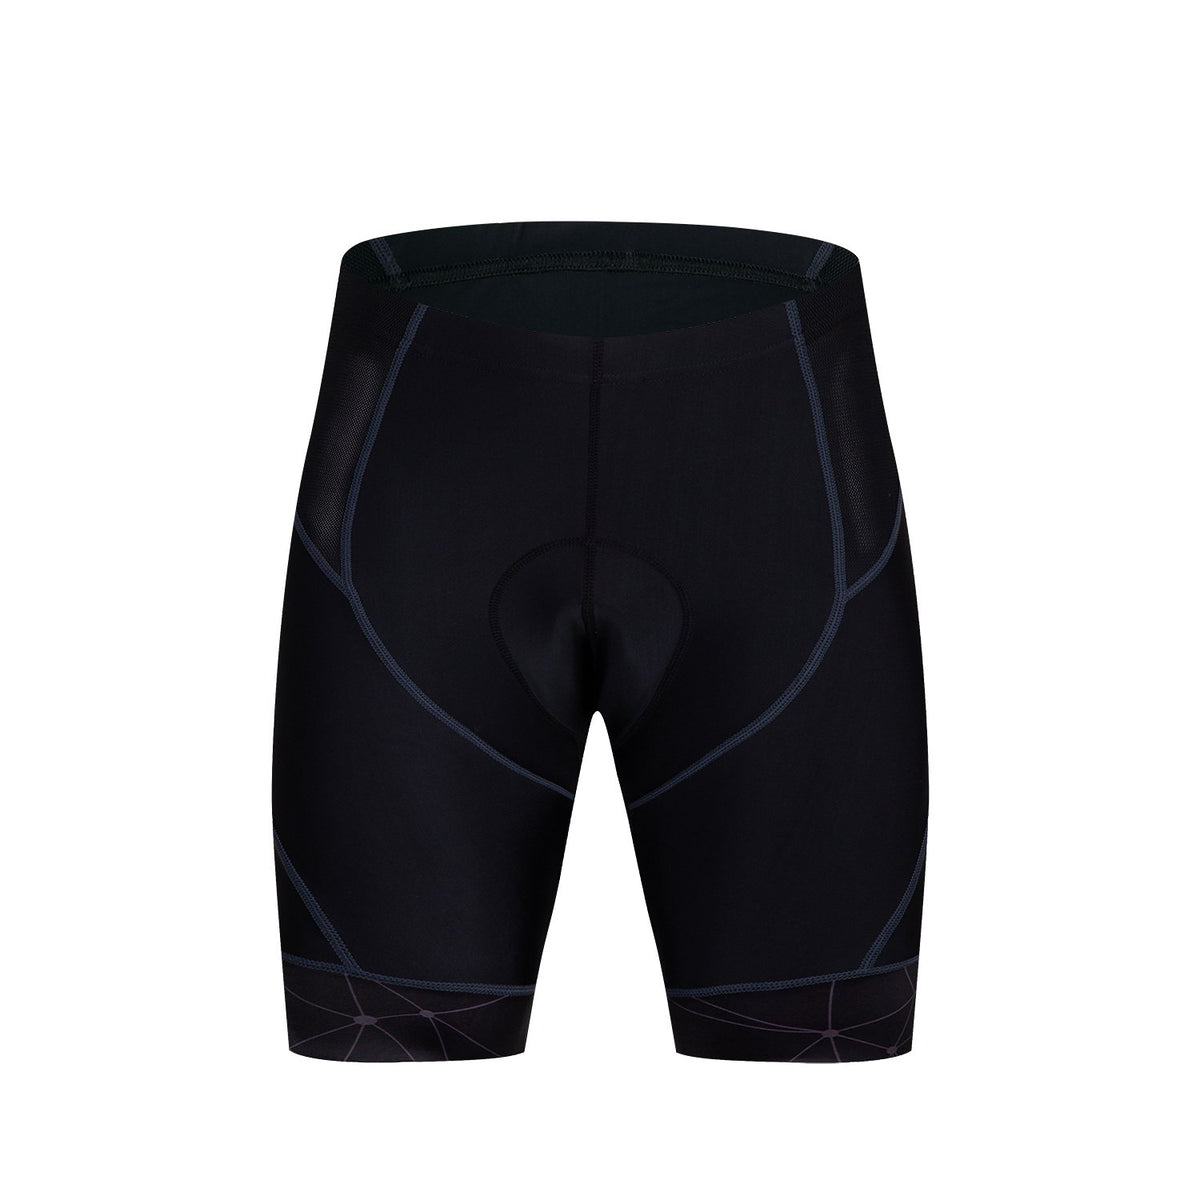 Men's Stylish Black Cycling Shorts